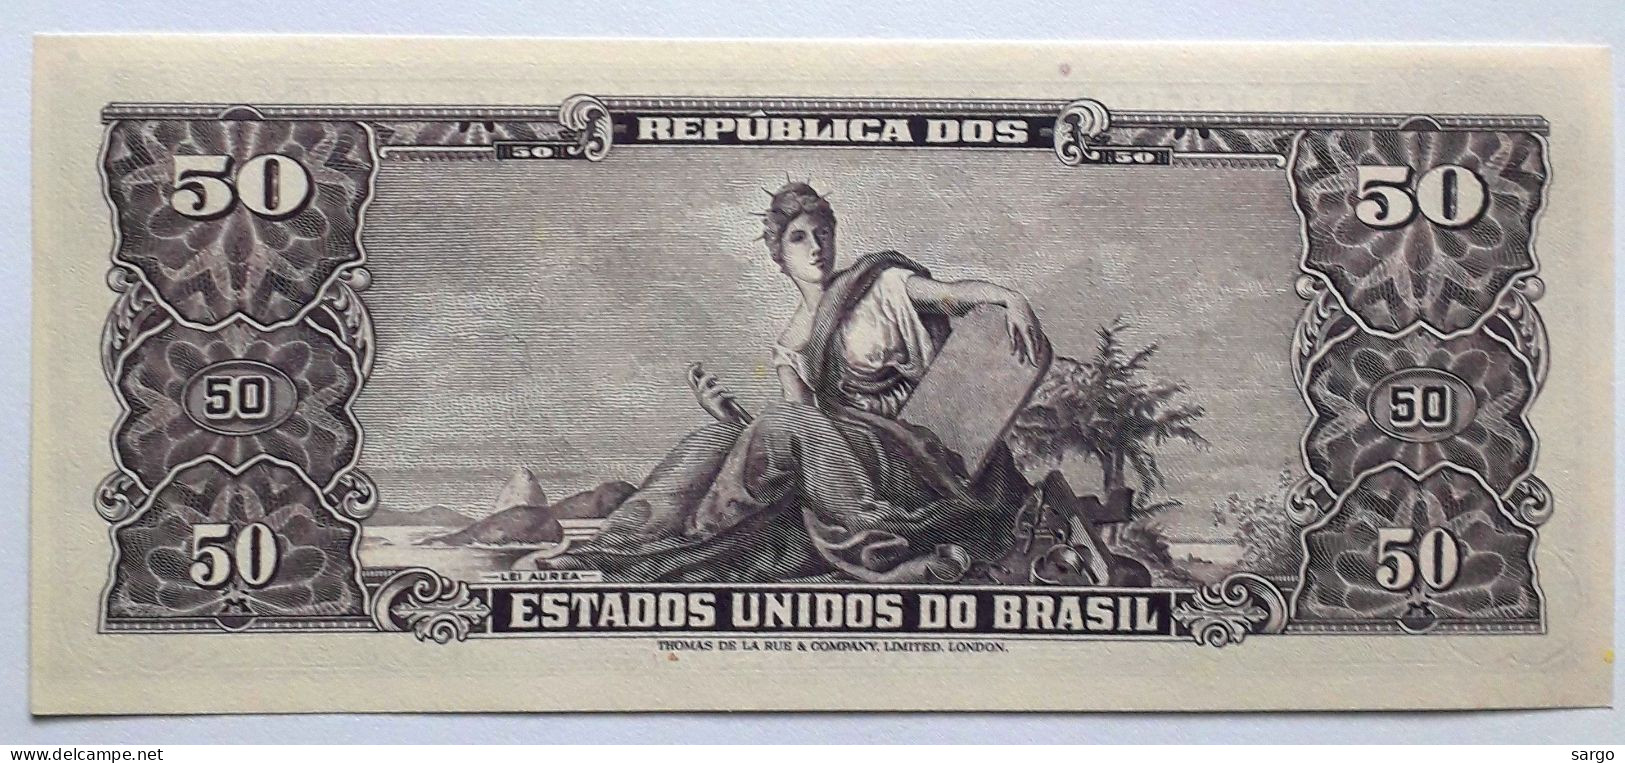 BRAZIL - 50 CRUZEIROS - P  184 B  (1966-1967) - UNC - BANKNOTES - PAPER MONEY - CARTAMONETA - - Brazil